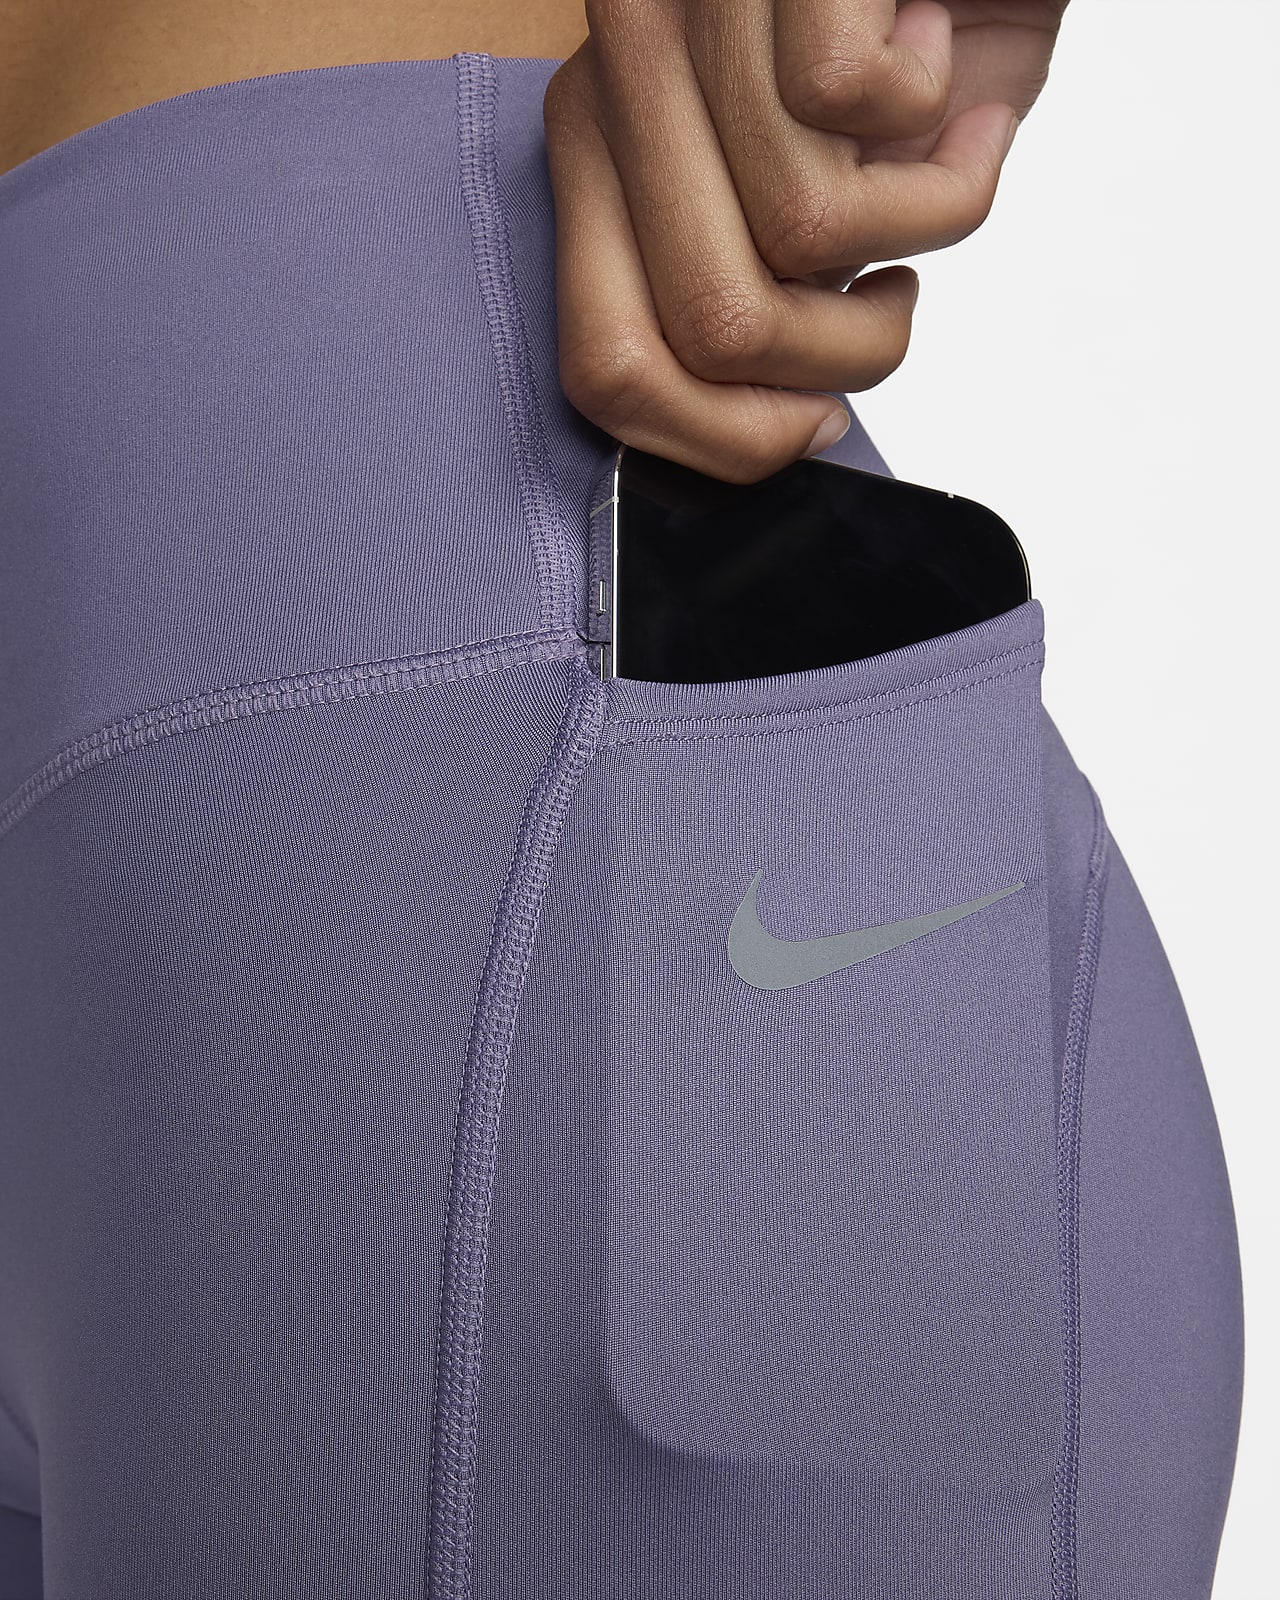 Nike Training power leggings in black with pocket